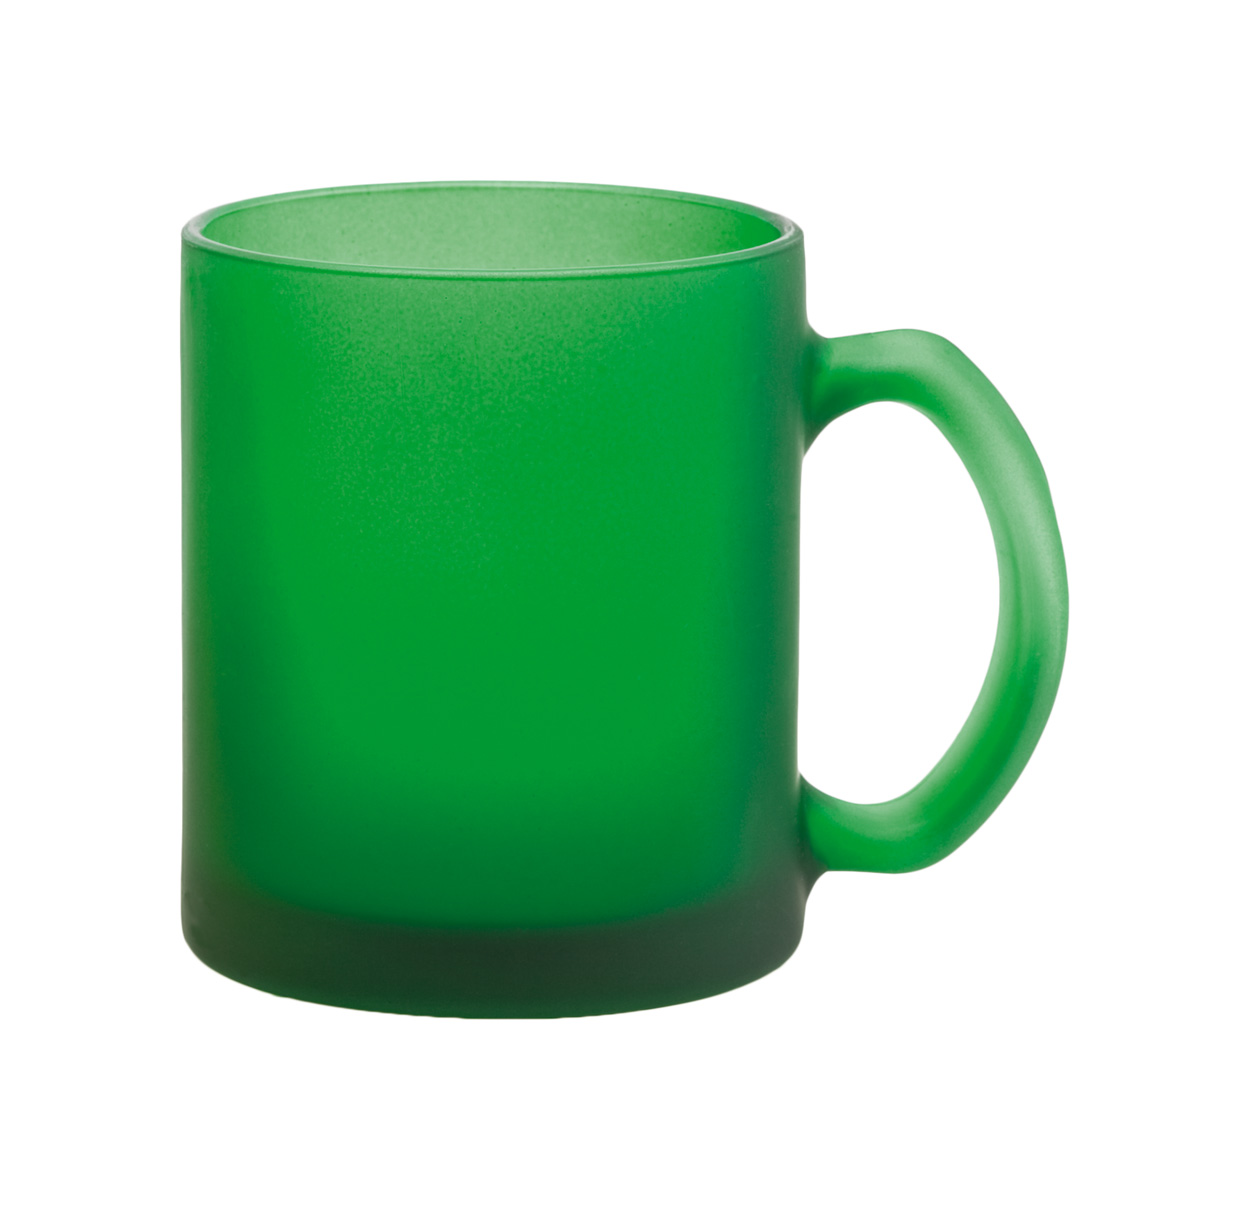 Wazi mug - green